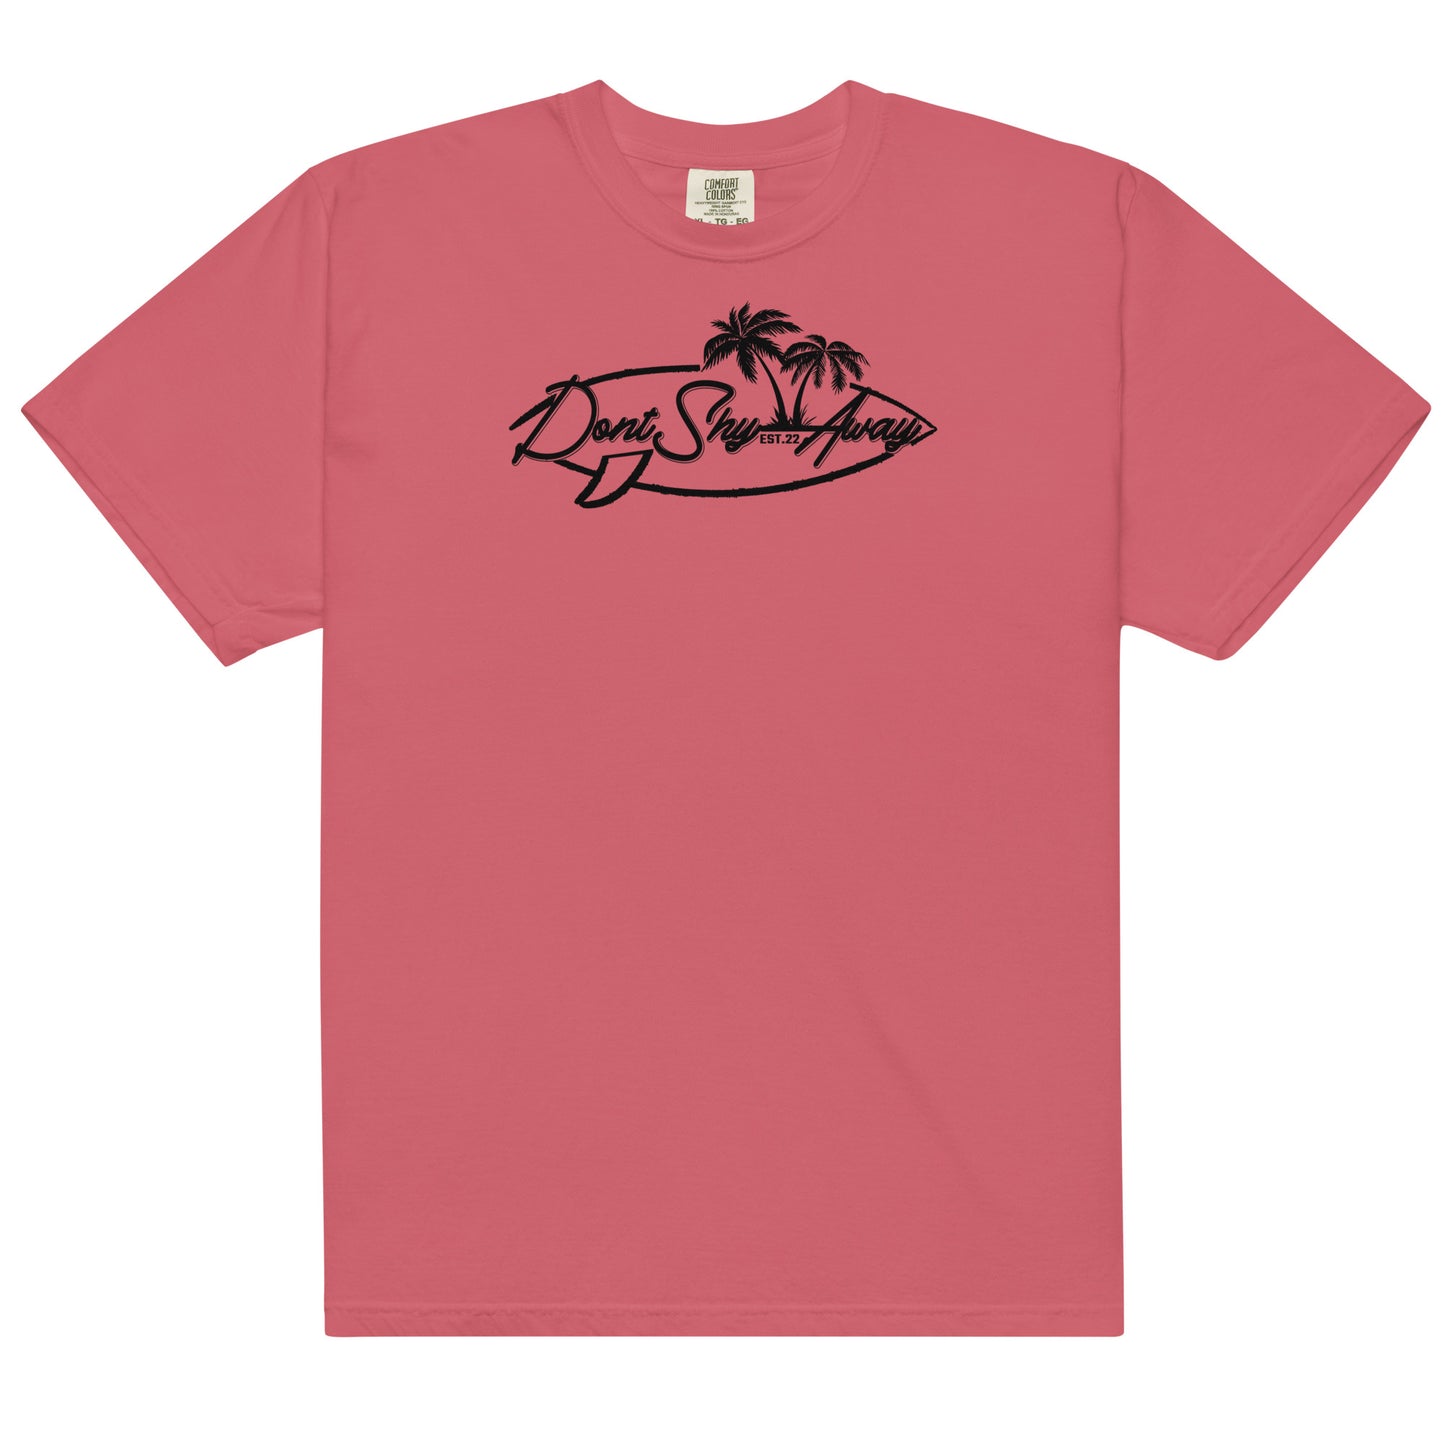 DontShyAway Surfers T-shirt